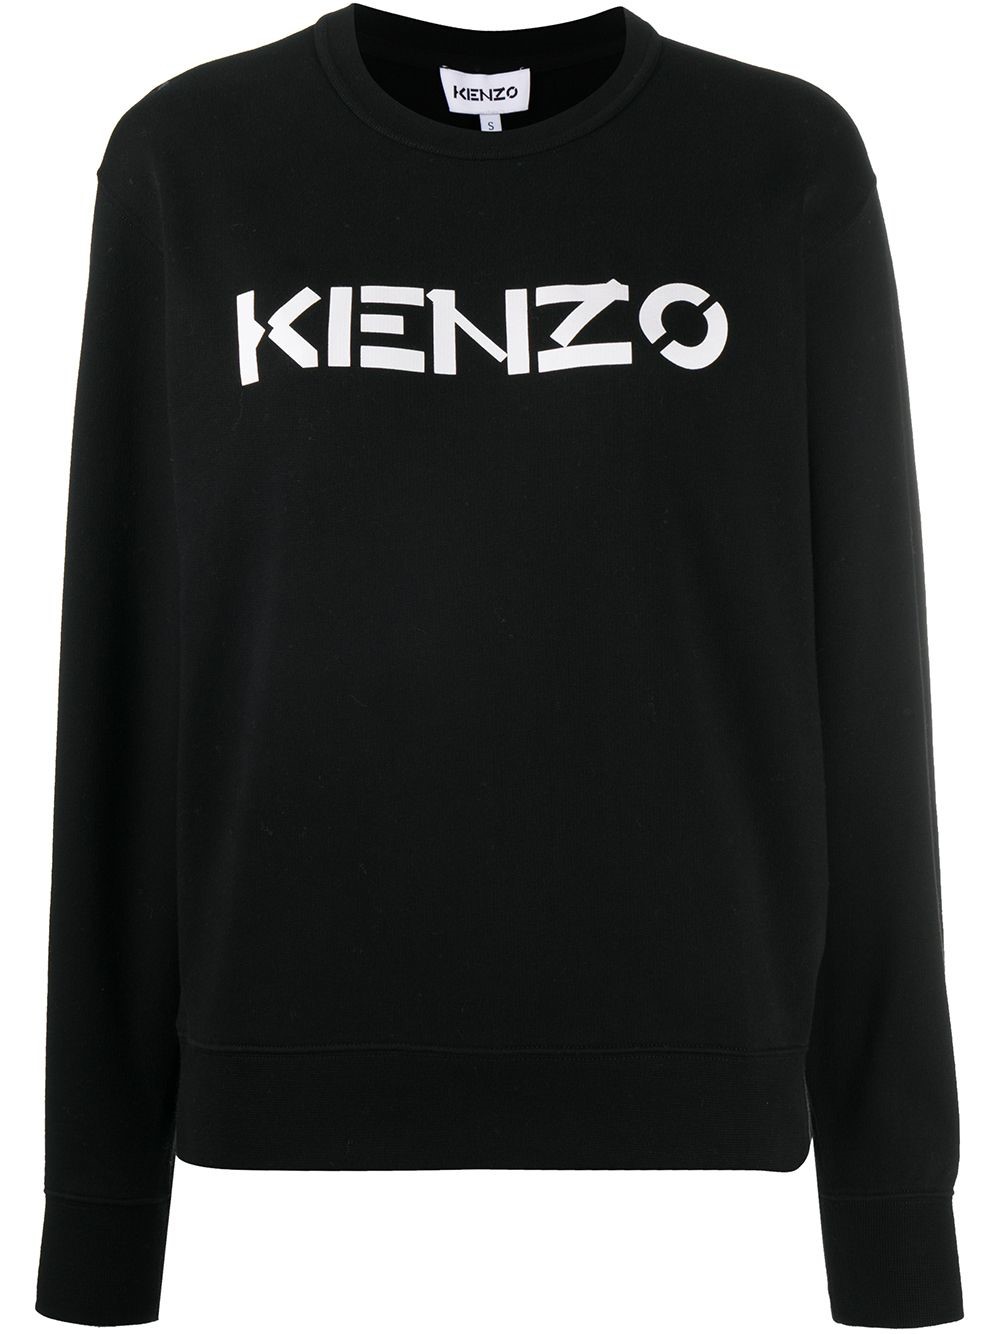 Kenzo Logo Sweater Discount, 67% OFF | www.ilpungolo.org